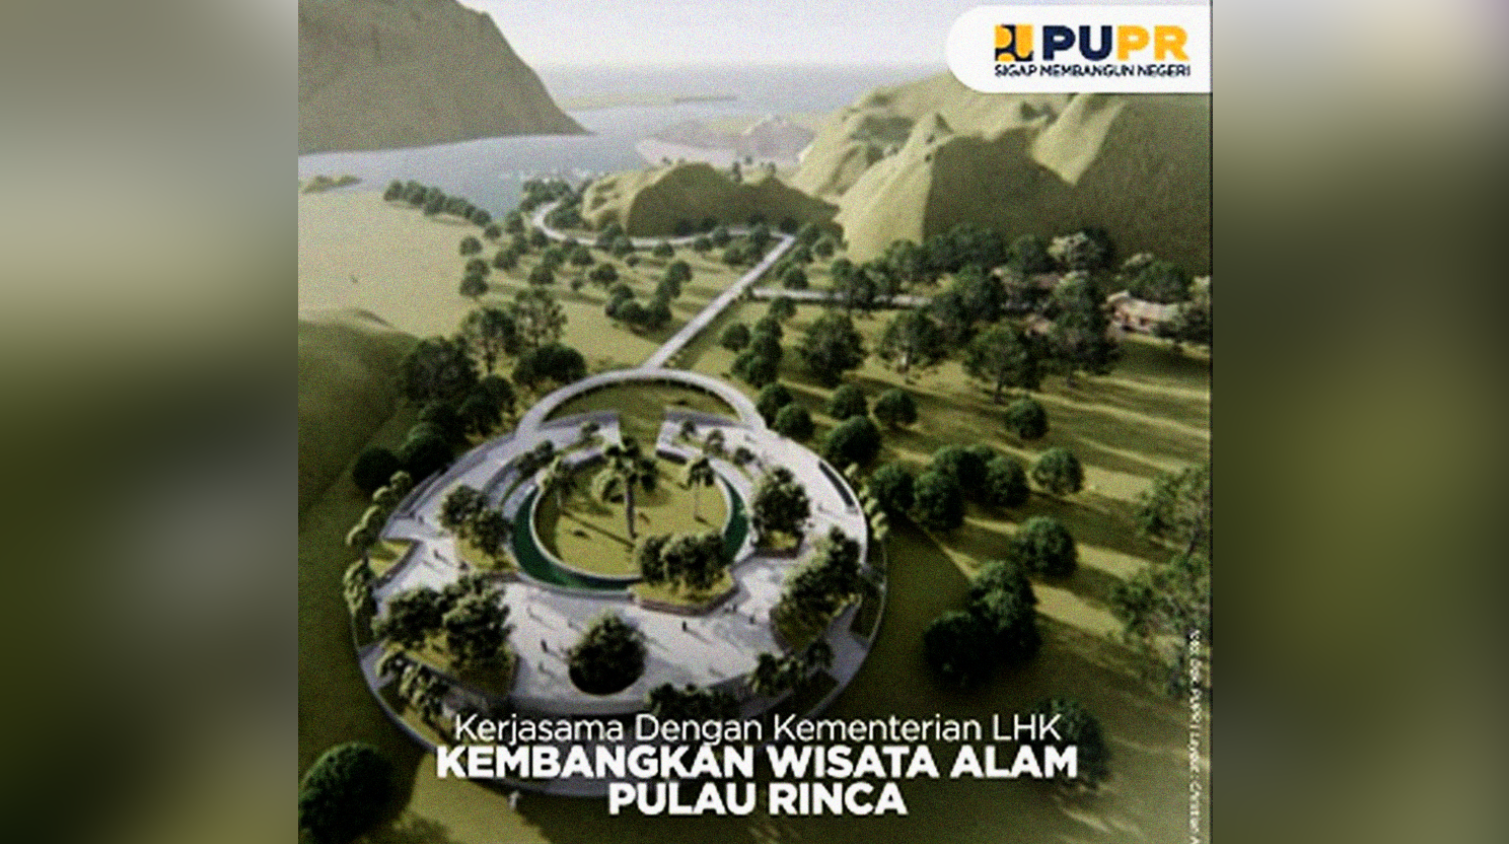 Proyek penataan di Pulau Rinca, Kementerian PUPR akan membuat kawasan bernuansa Jurassic Park. (Foto: Dok. PUPR)